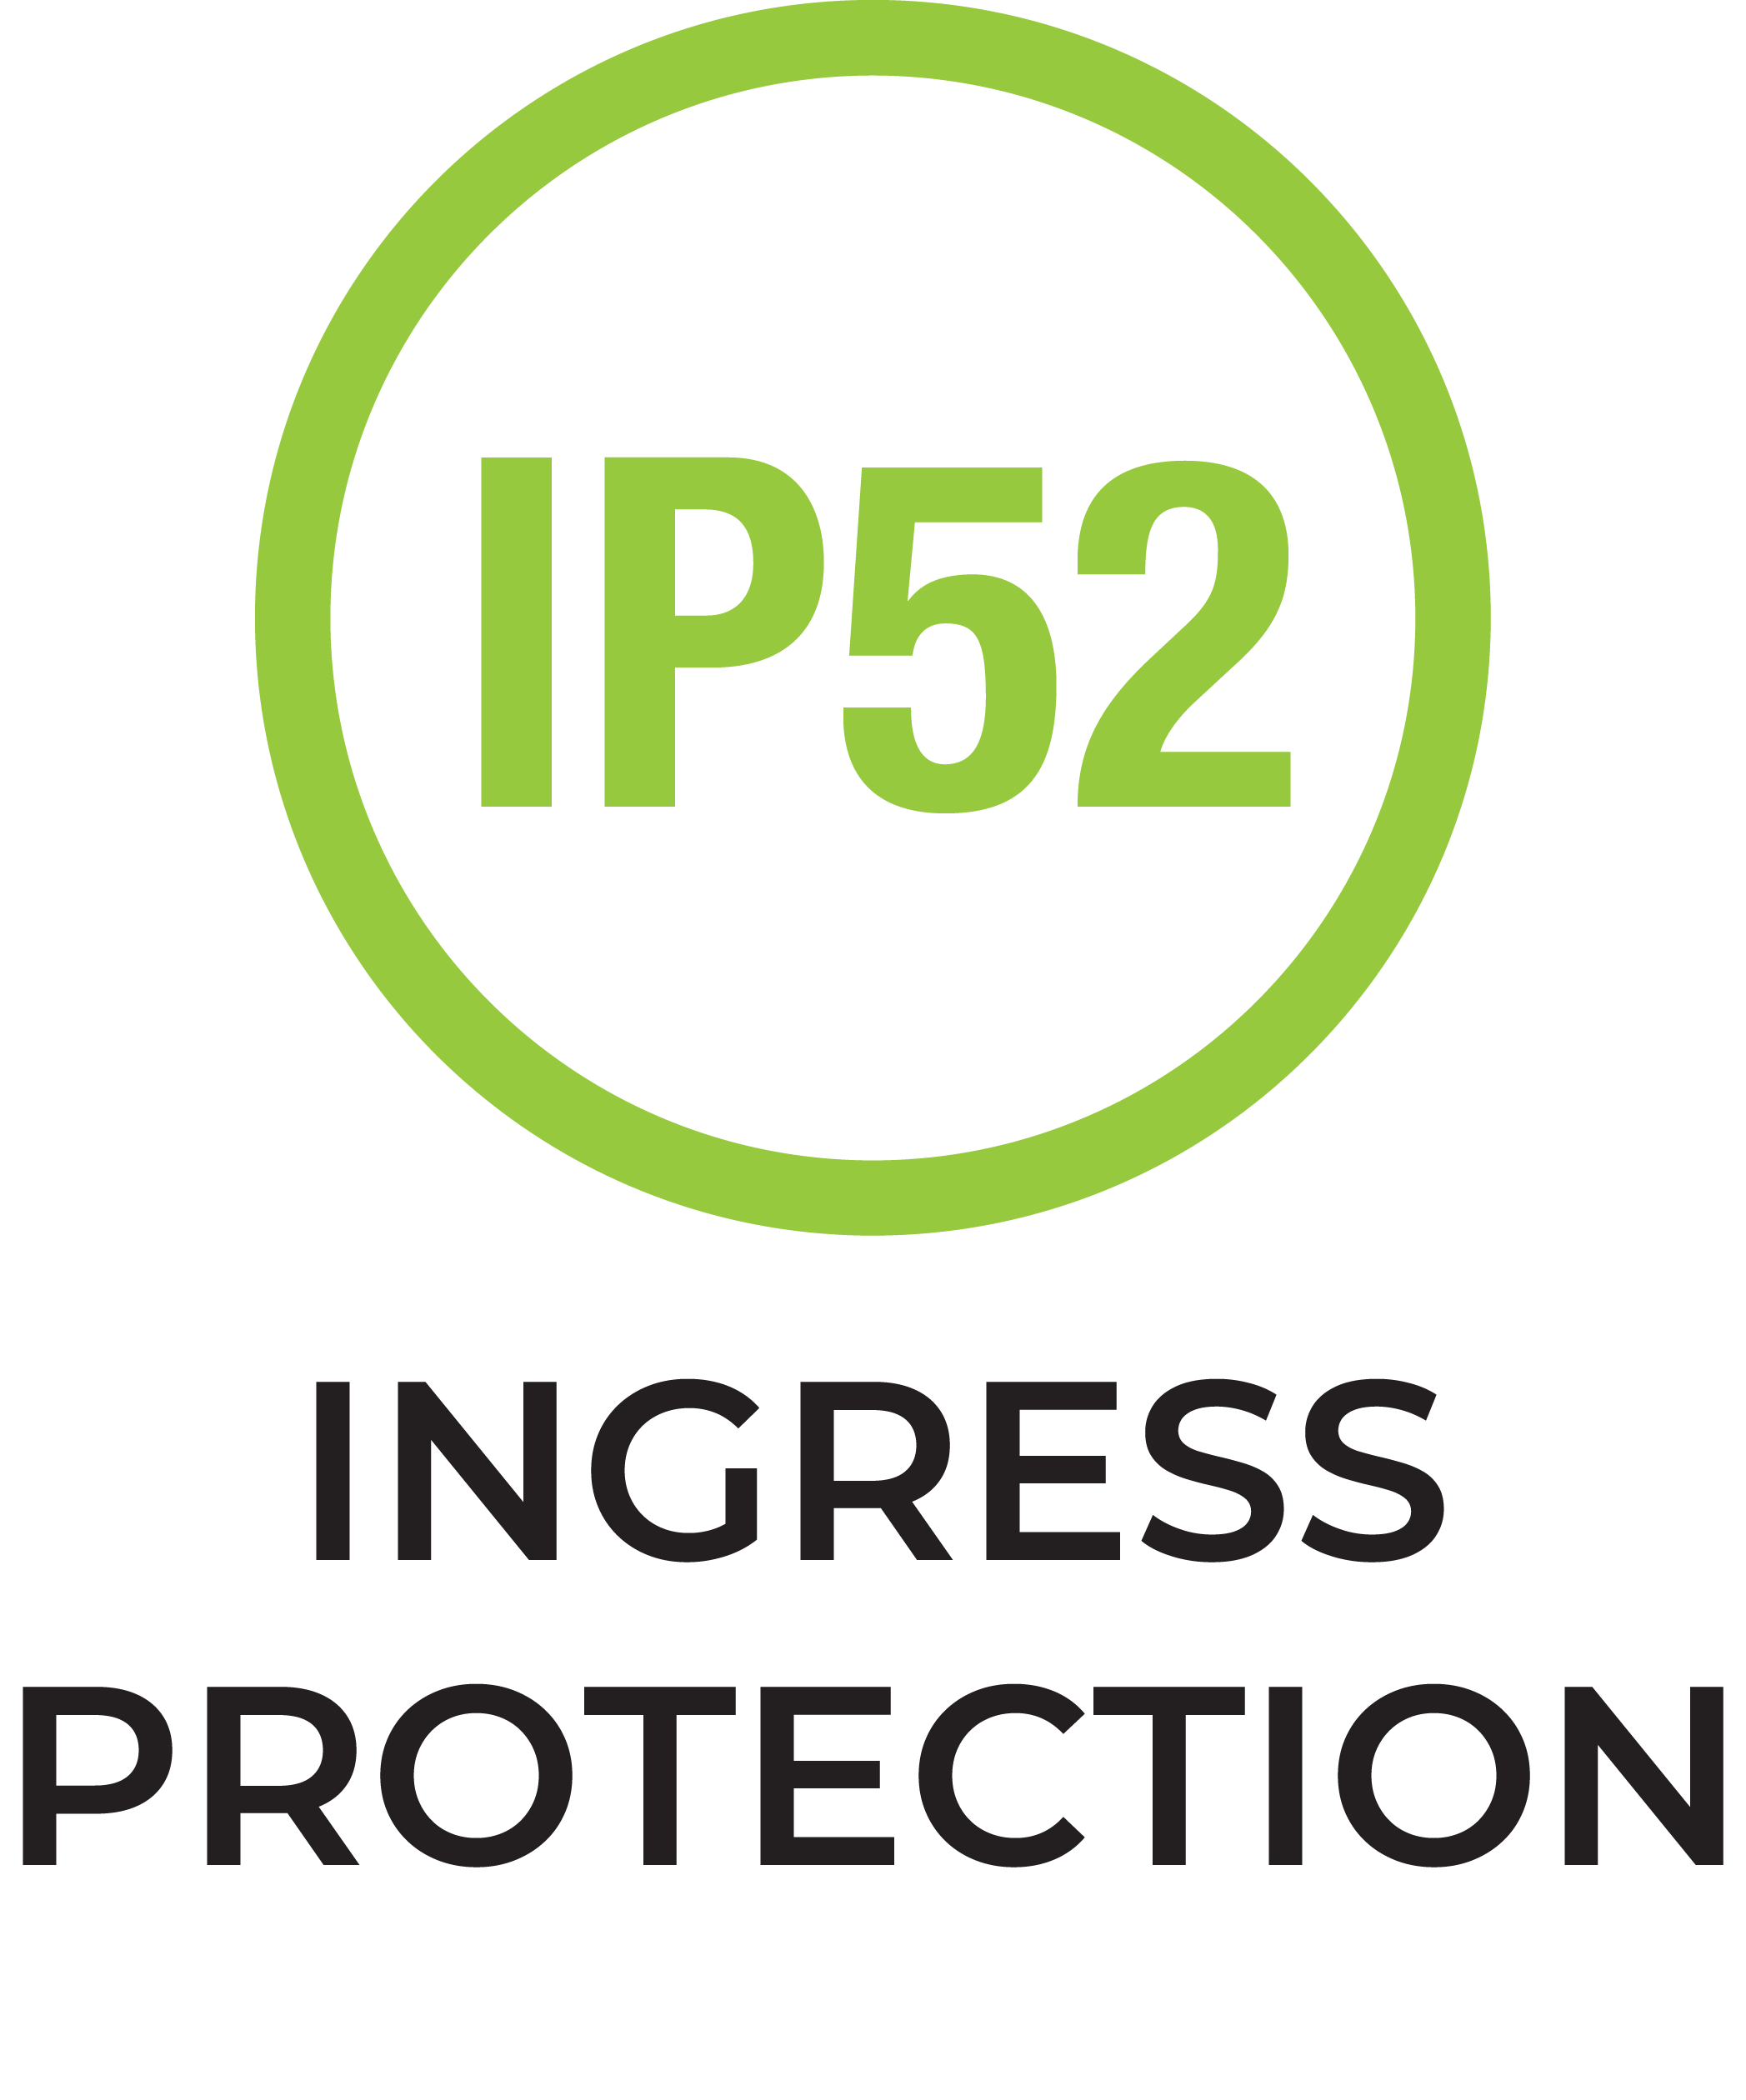 IP52 1